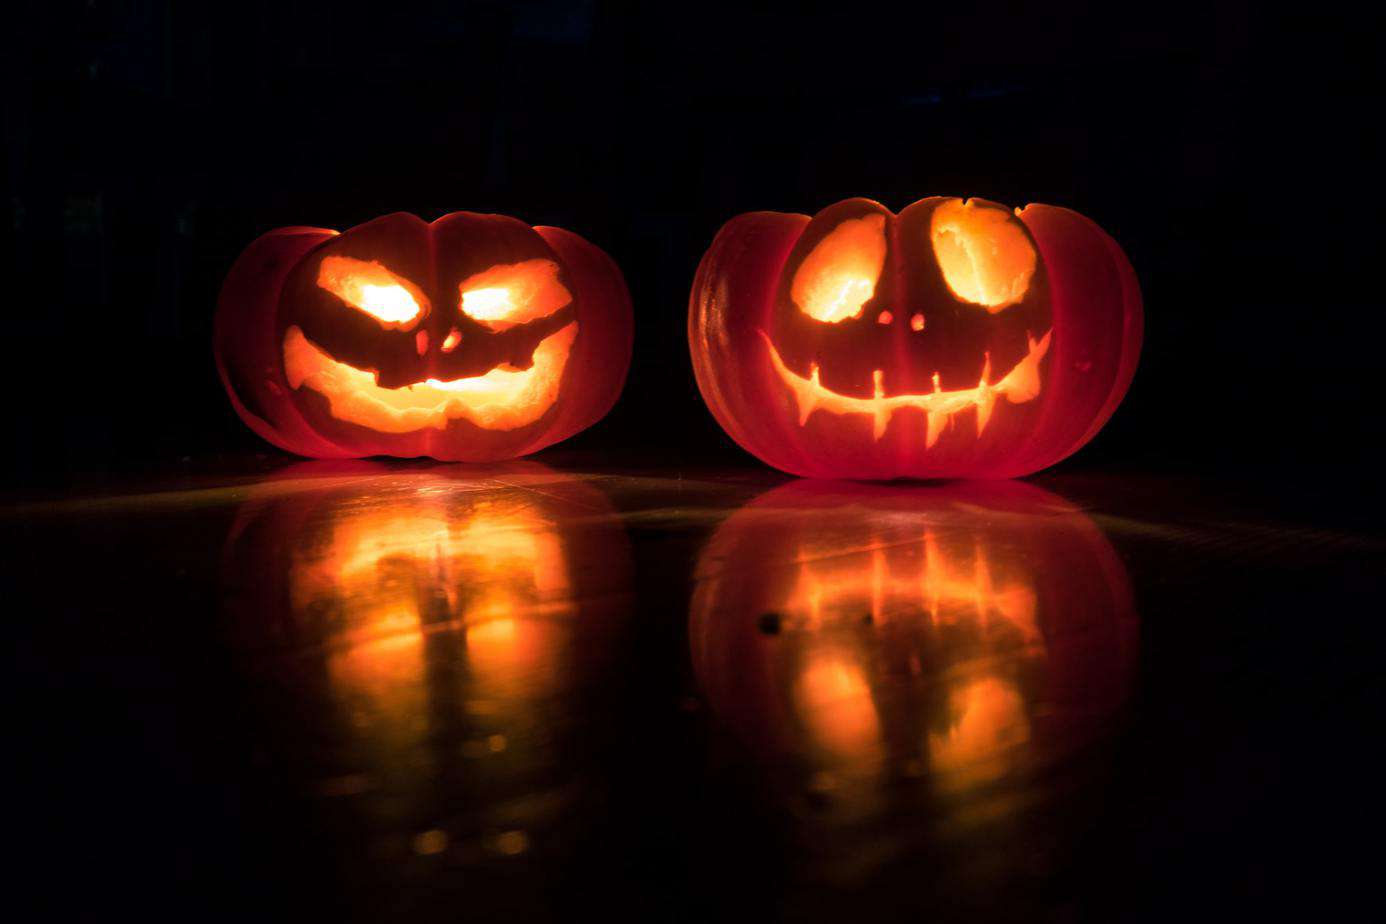 Carved pumpkins with lights